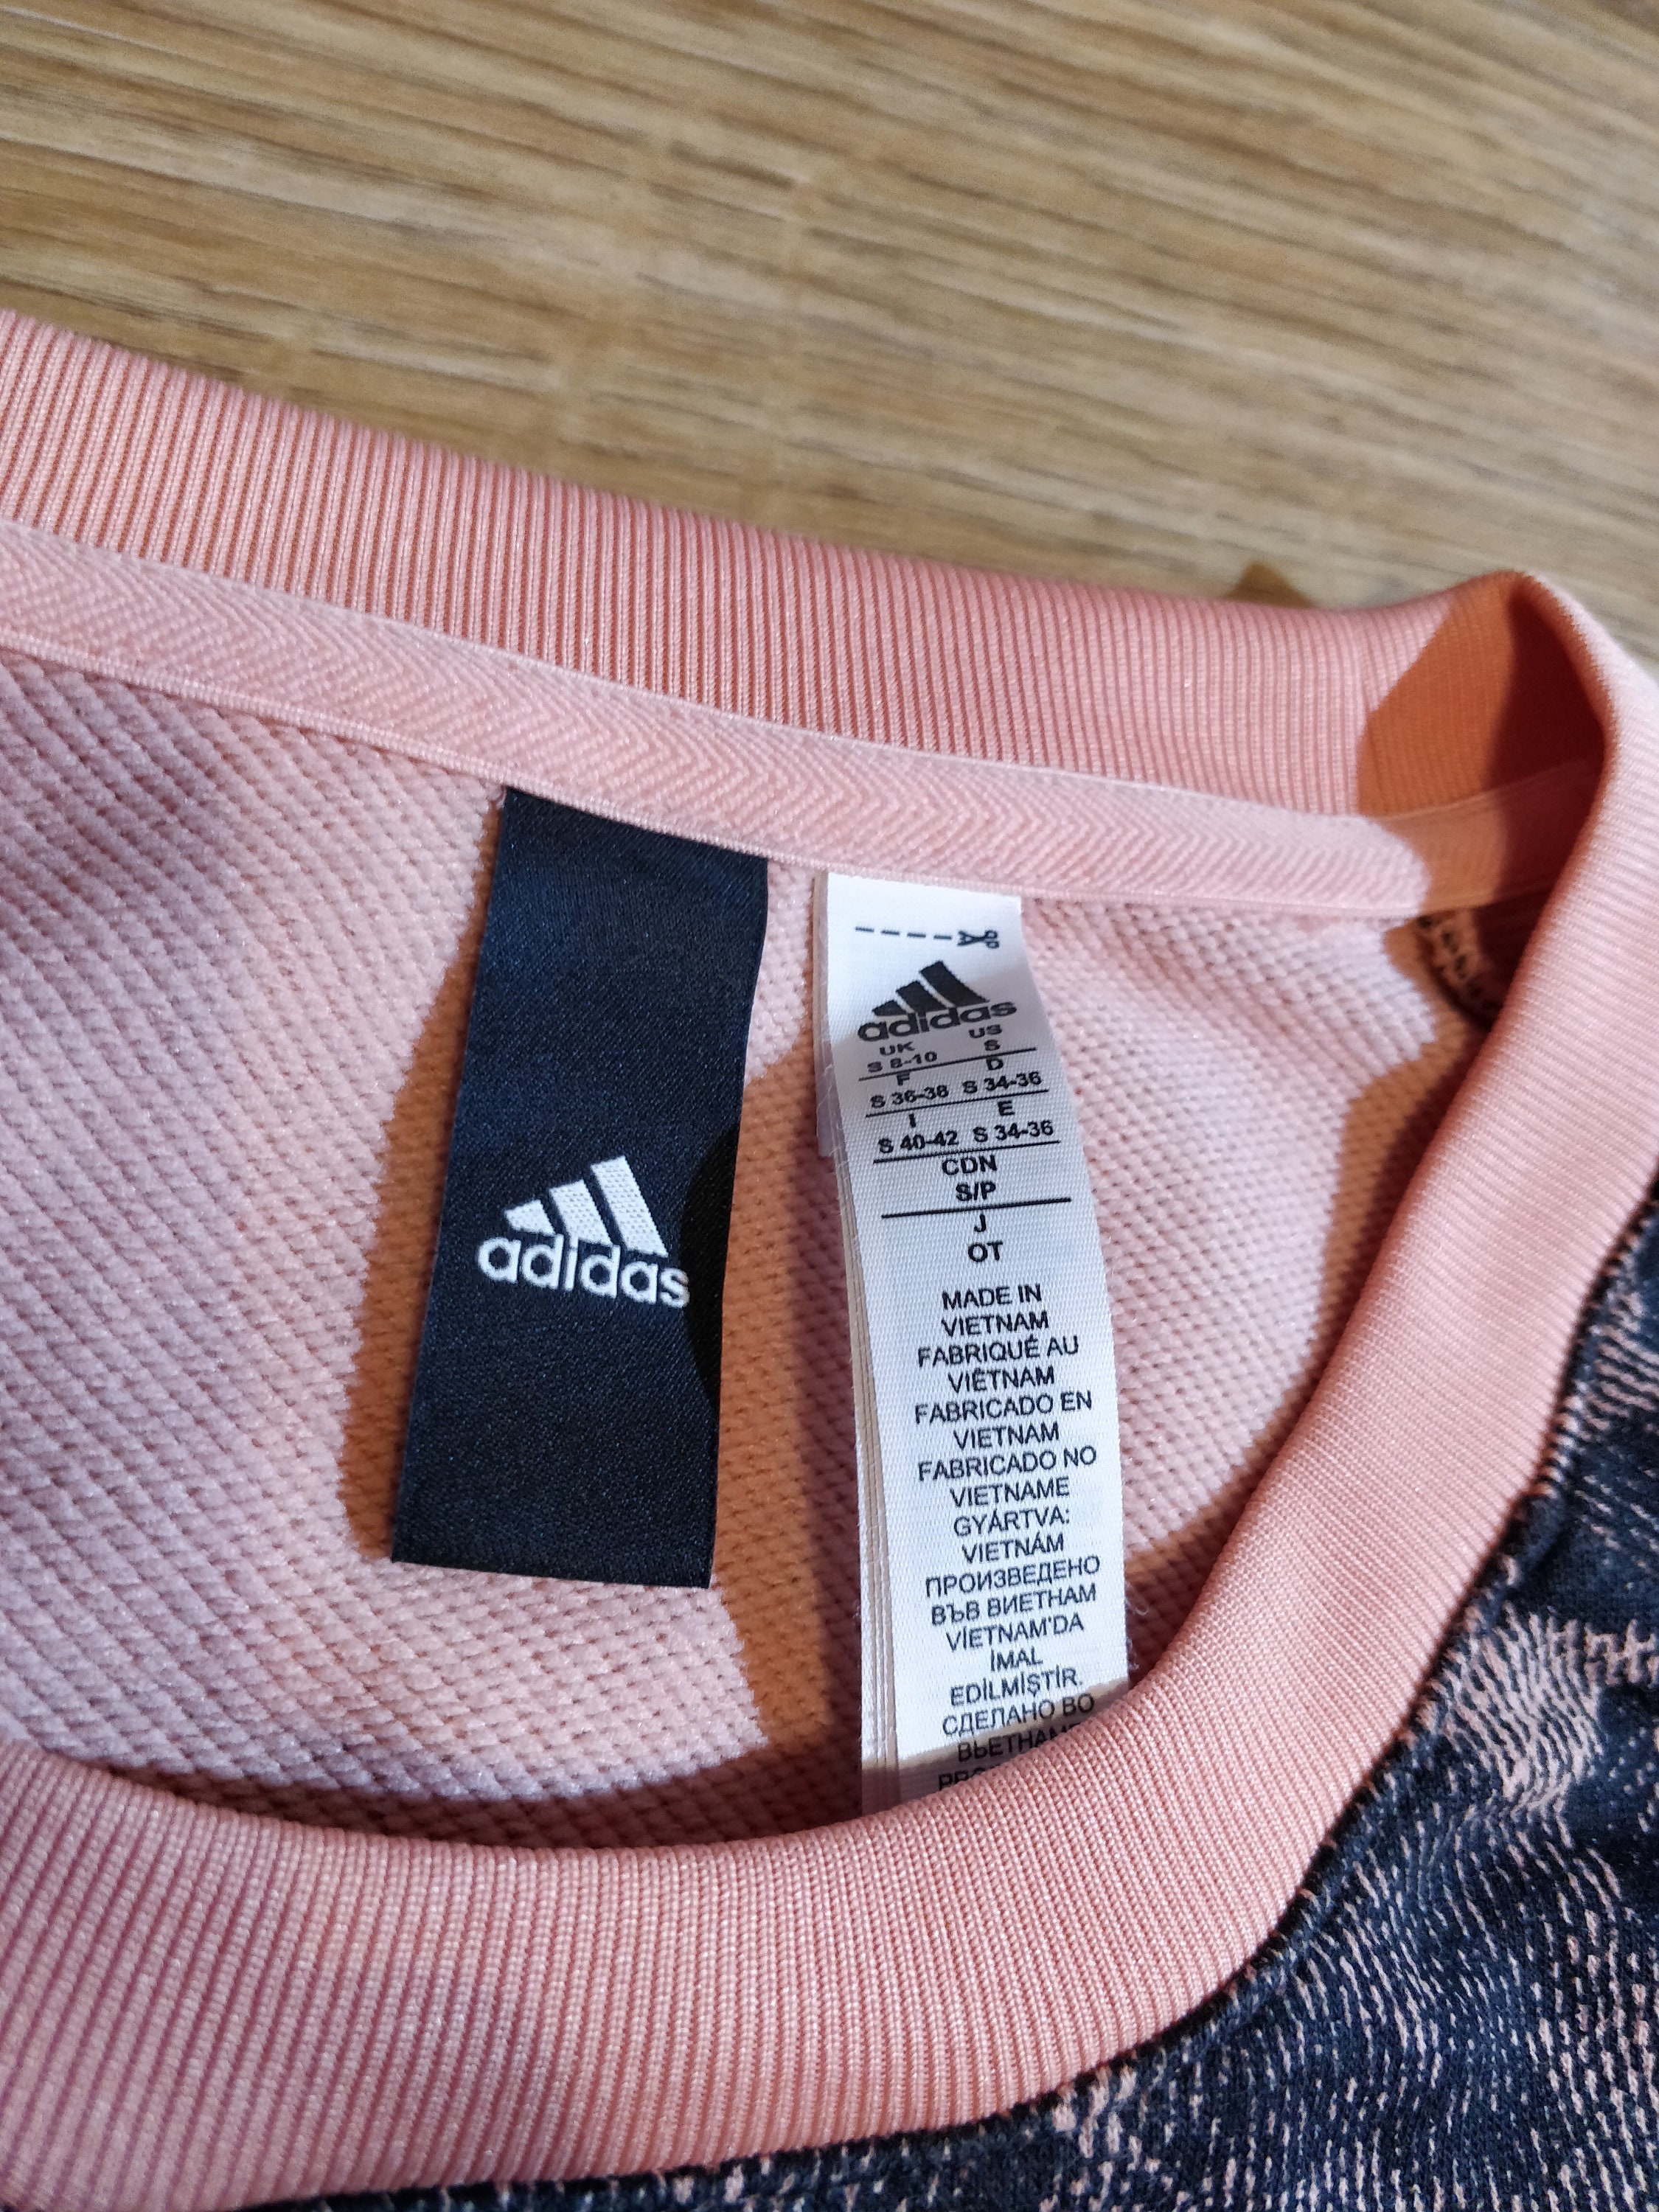 Adidas Leopard Print Womens Sweatshirt Top Jacket Crewneck | Etsy